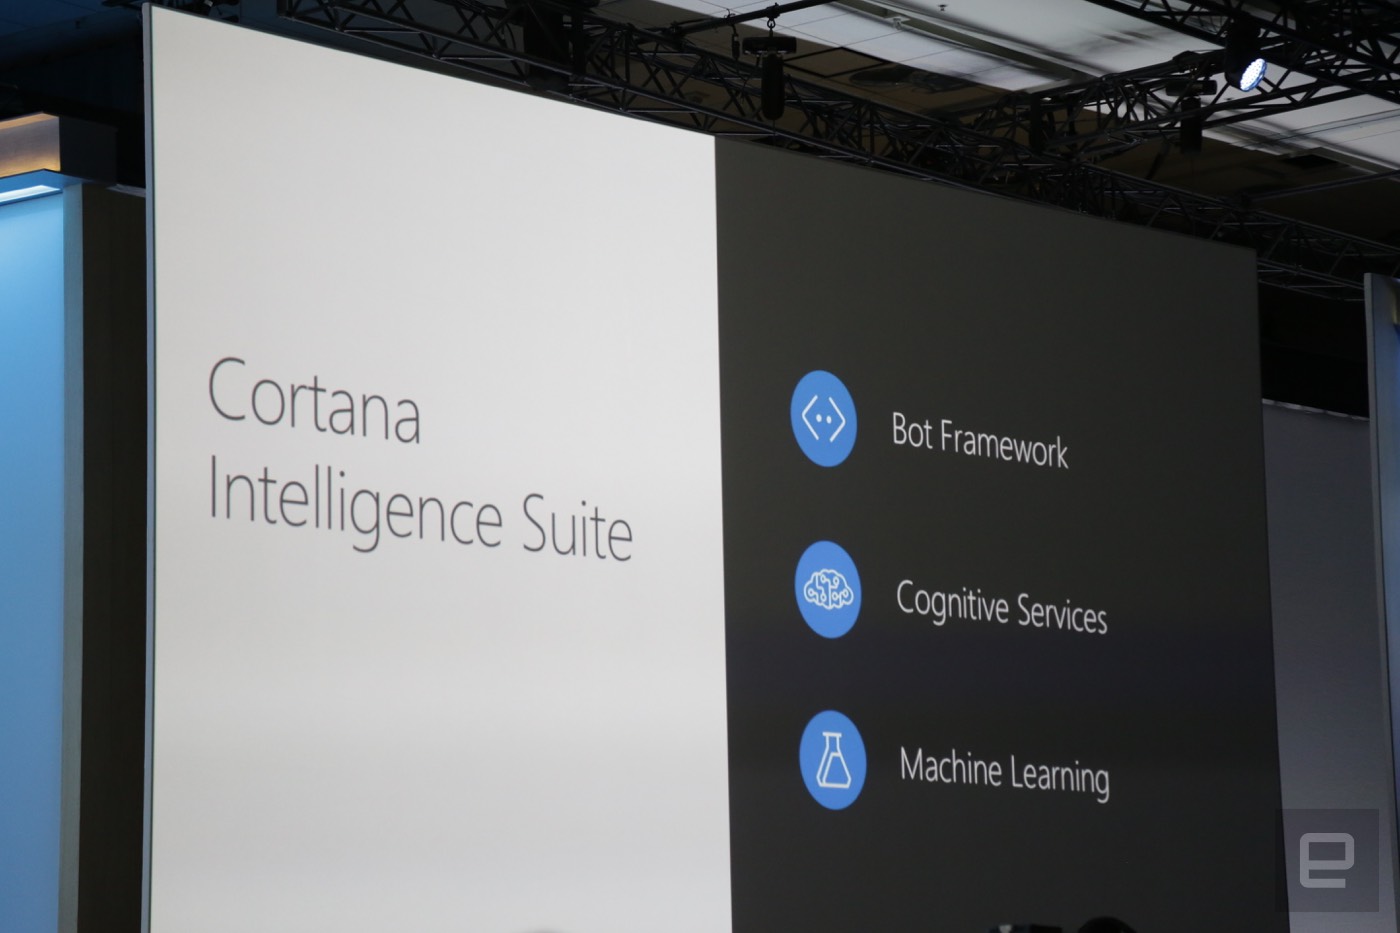 Cortana Intelligence Suite